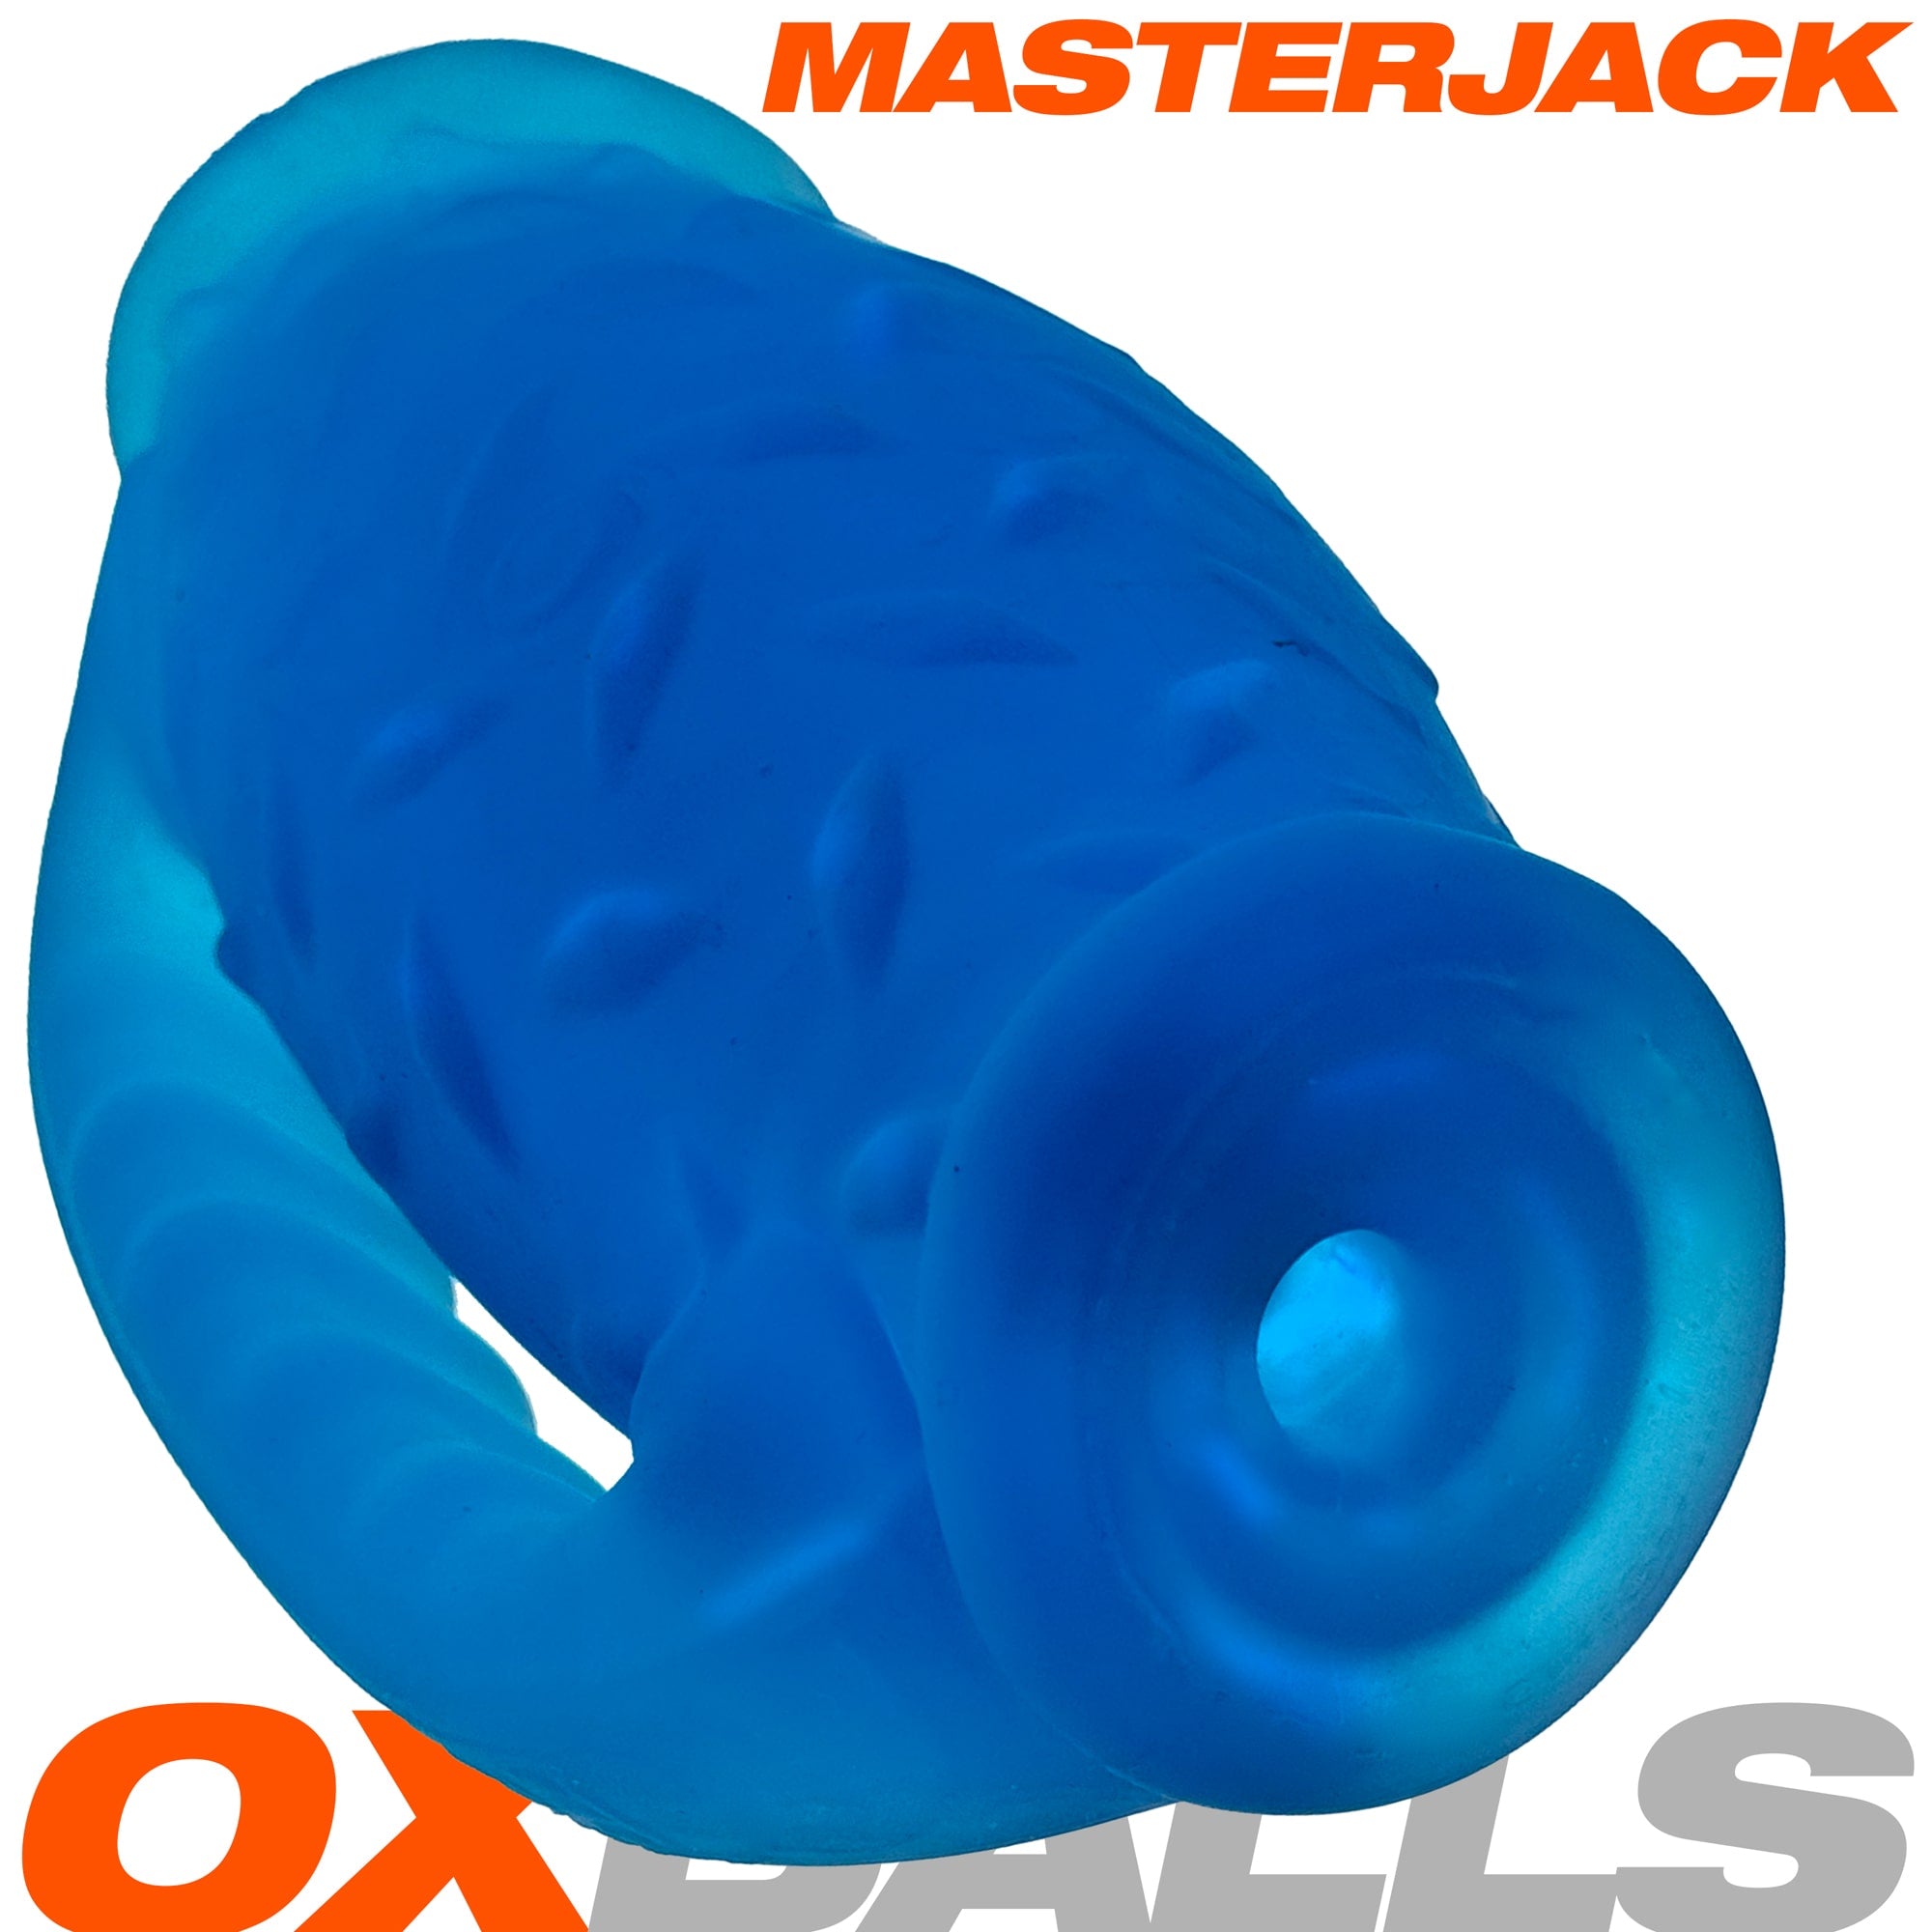 Oxballs MASTERJACK • Double Penetration Stroker